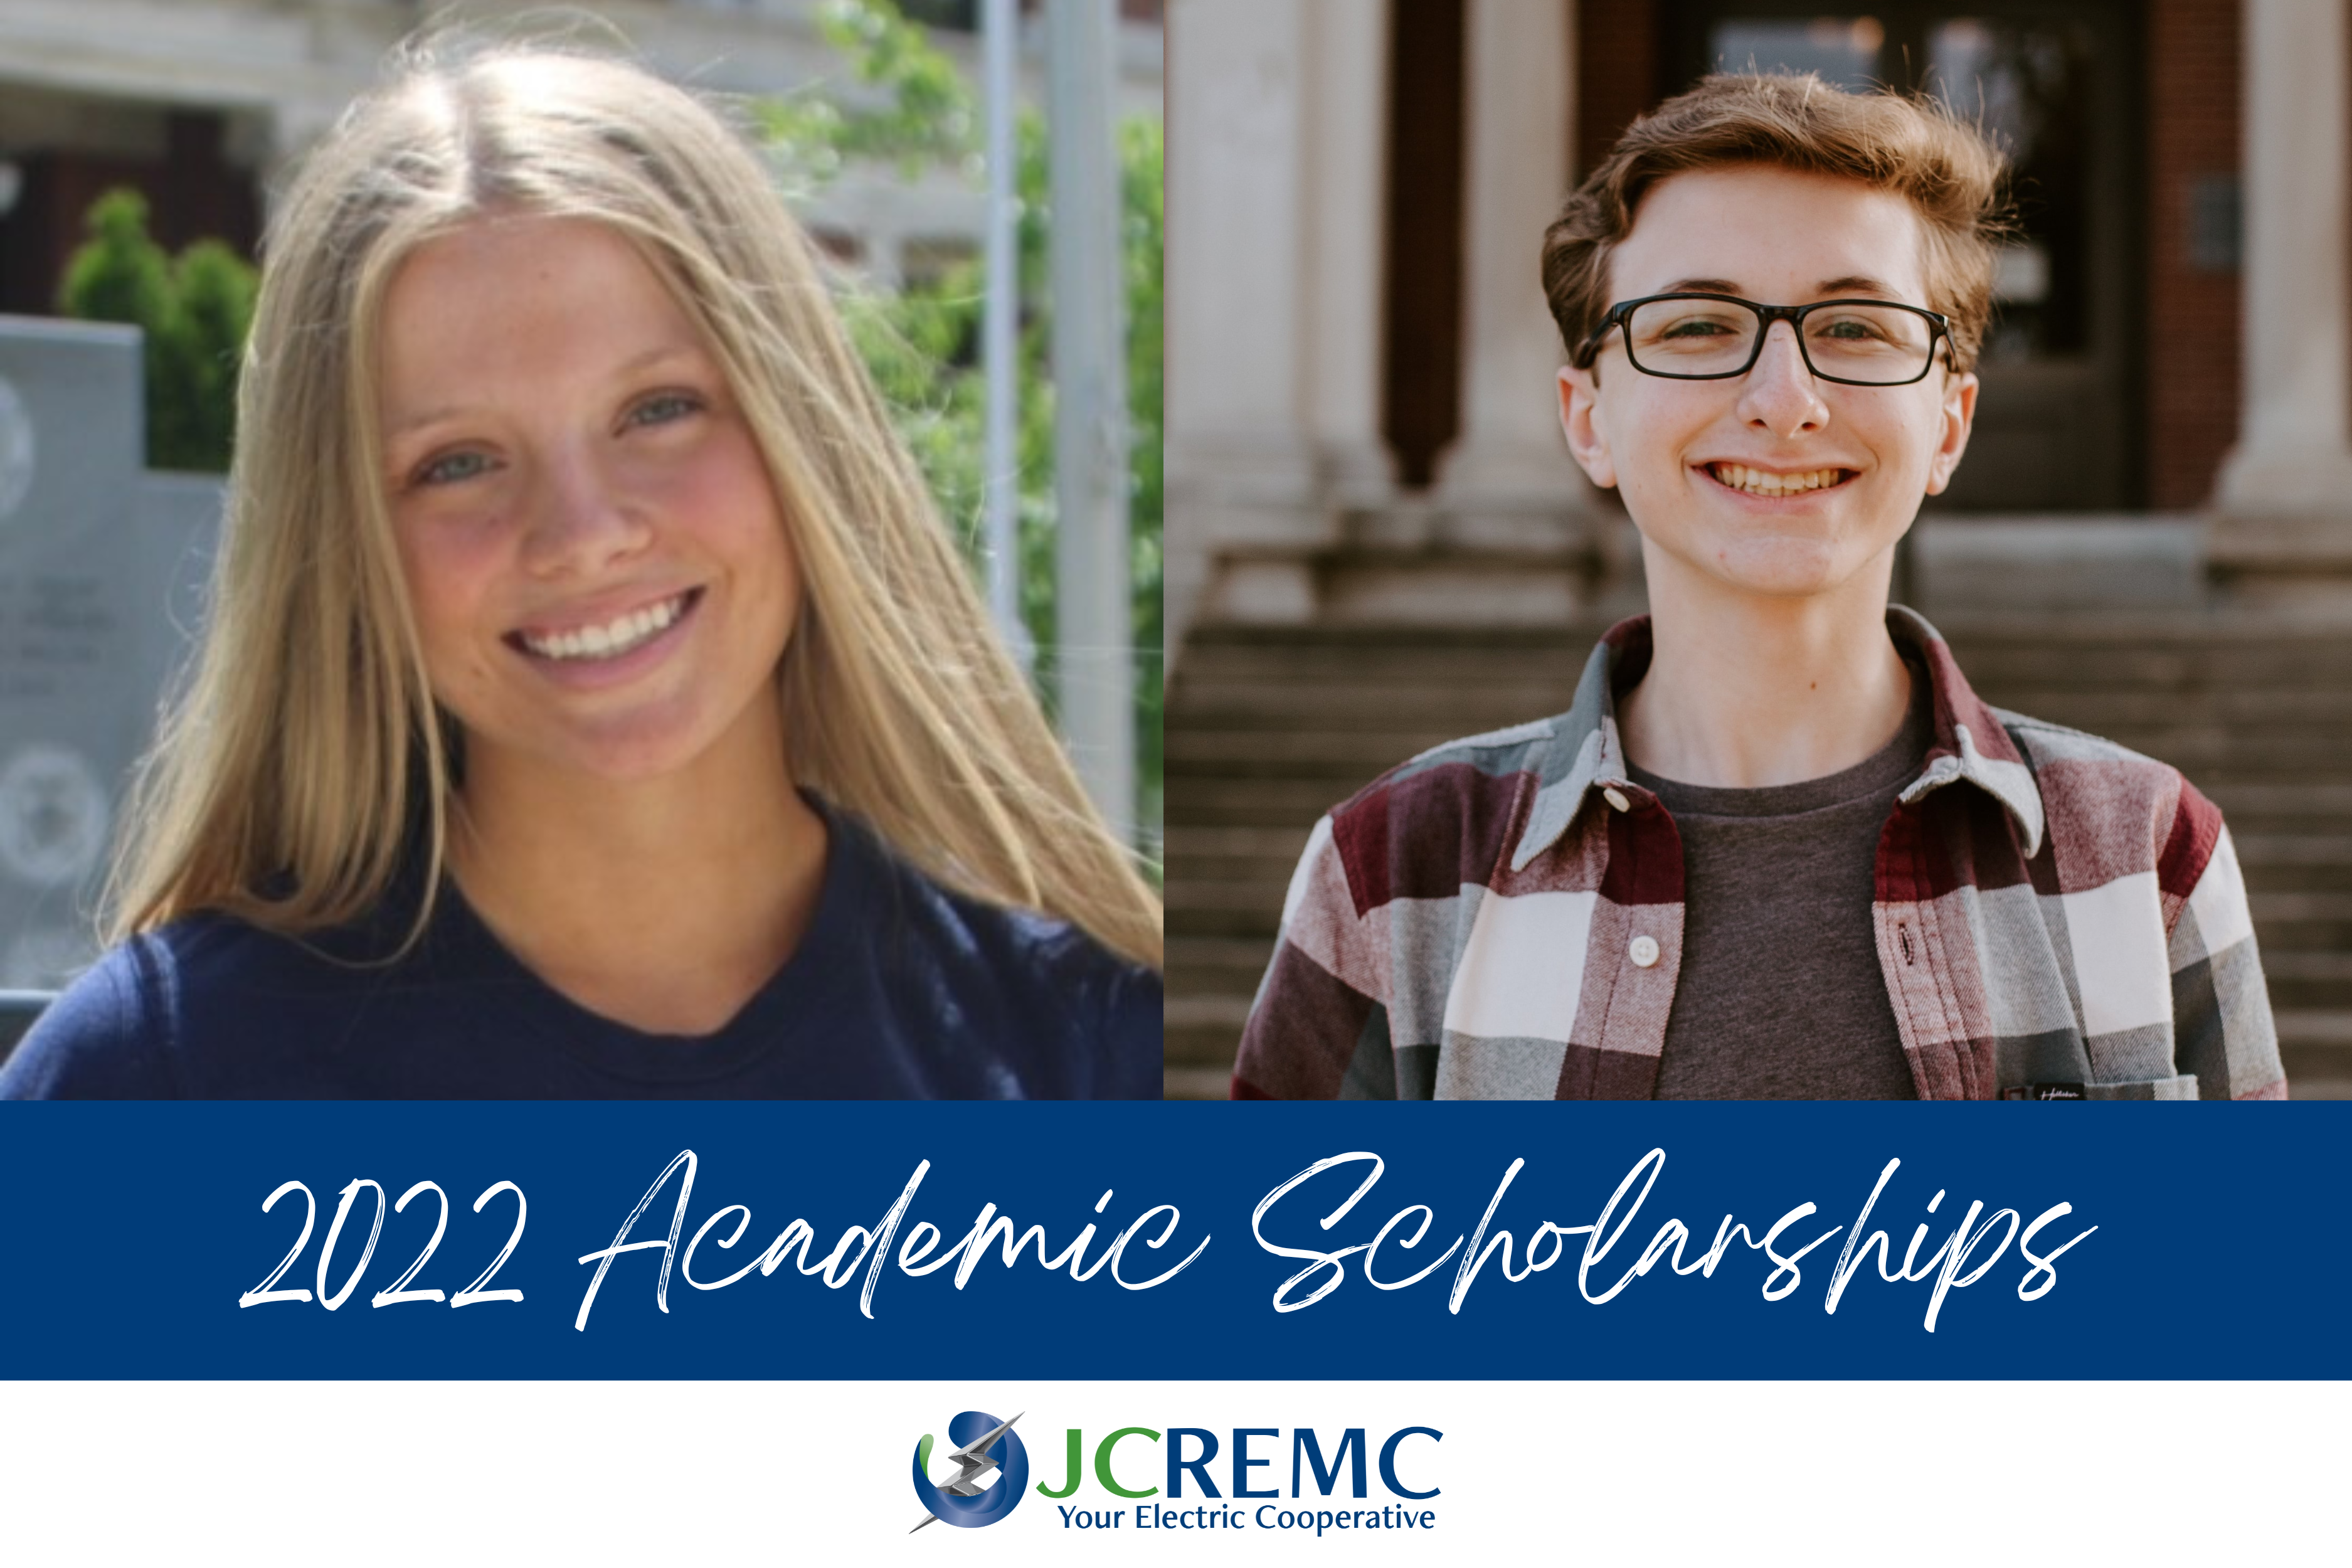 JCREMC recognizes Academic Scholarship recipients